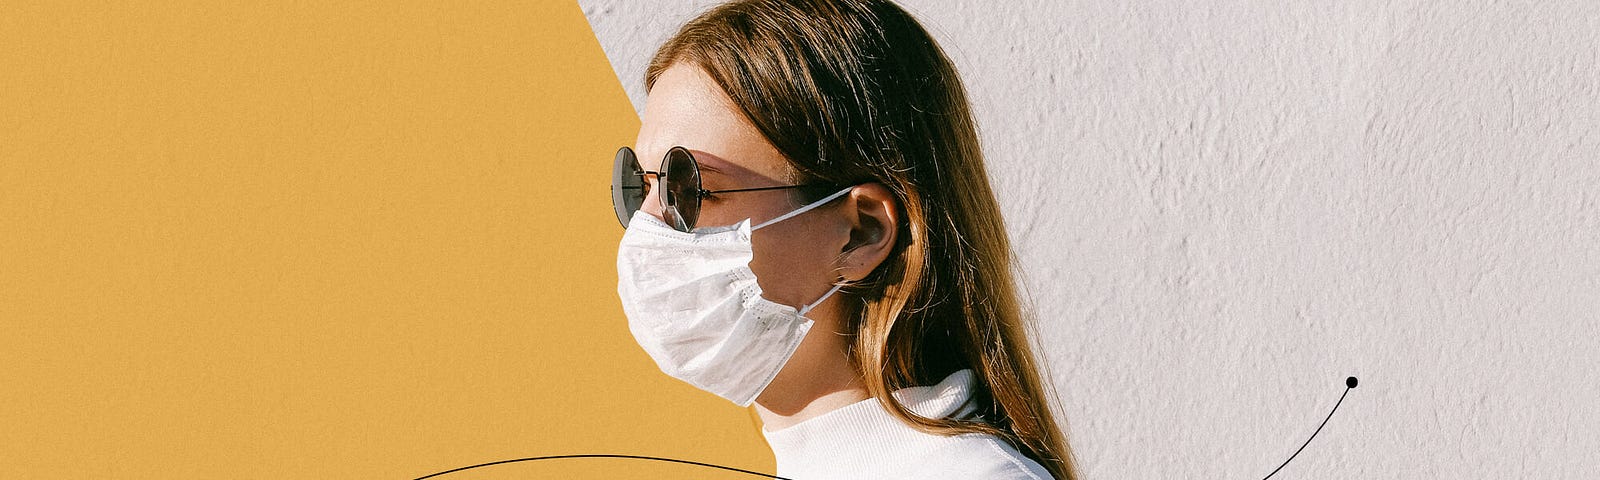 Women in mask protecting against virus